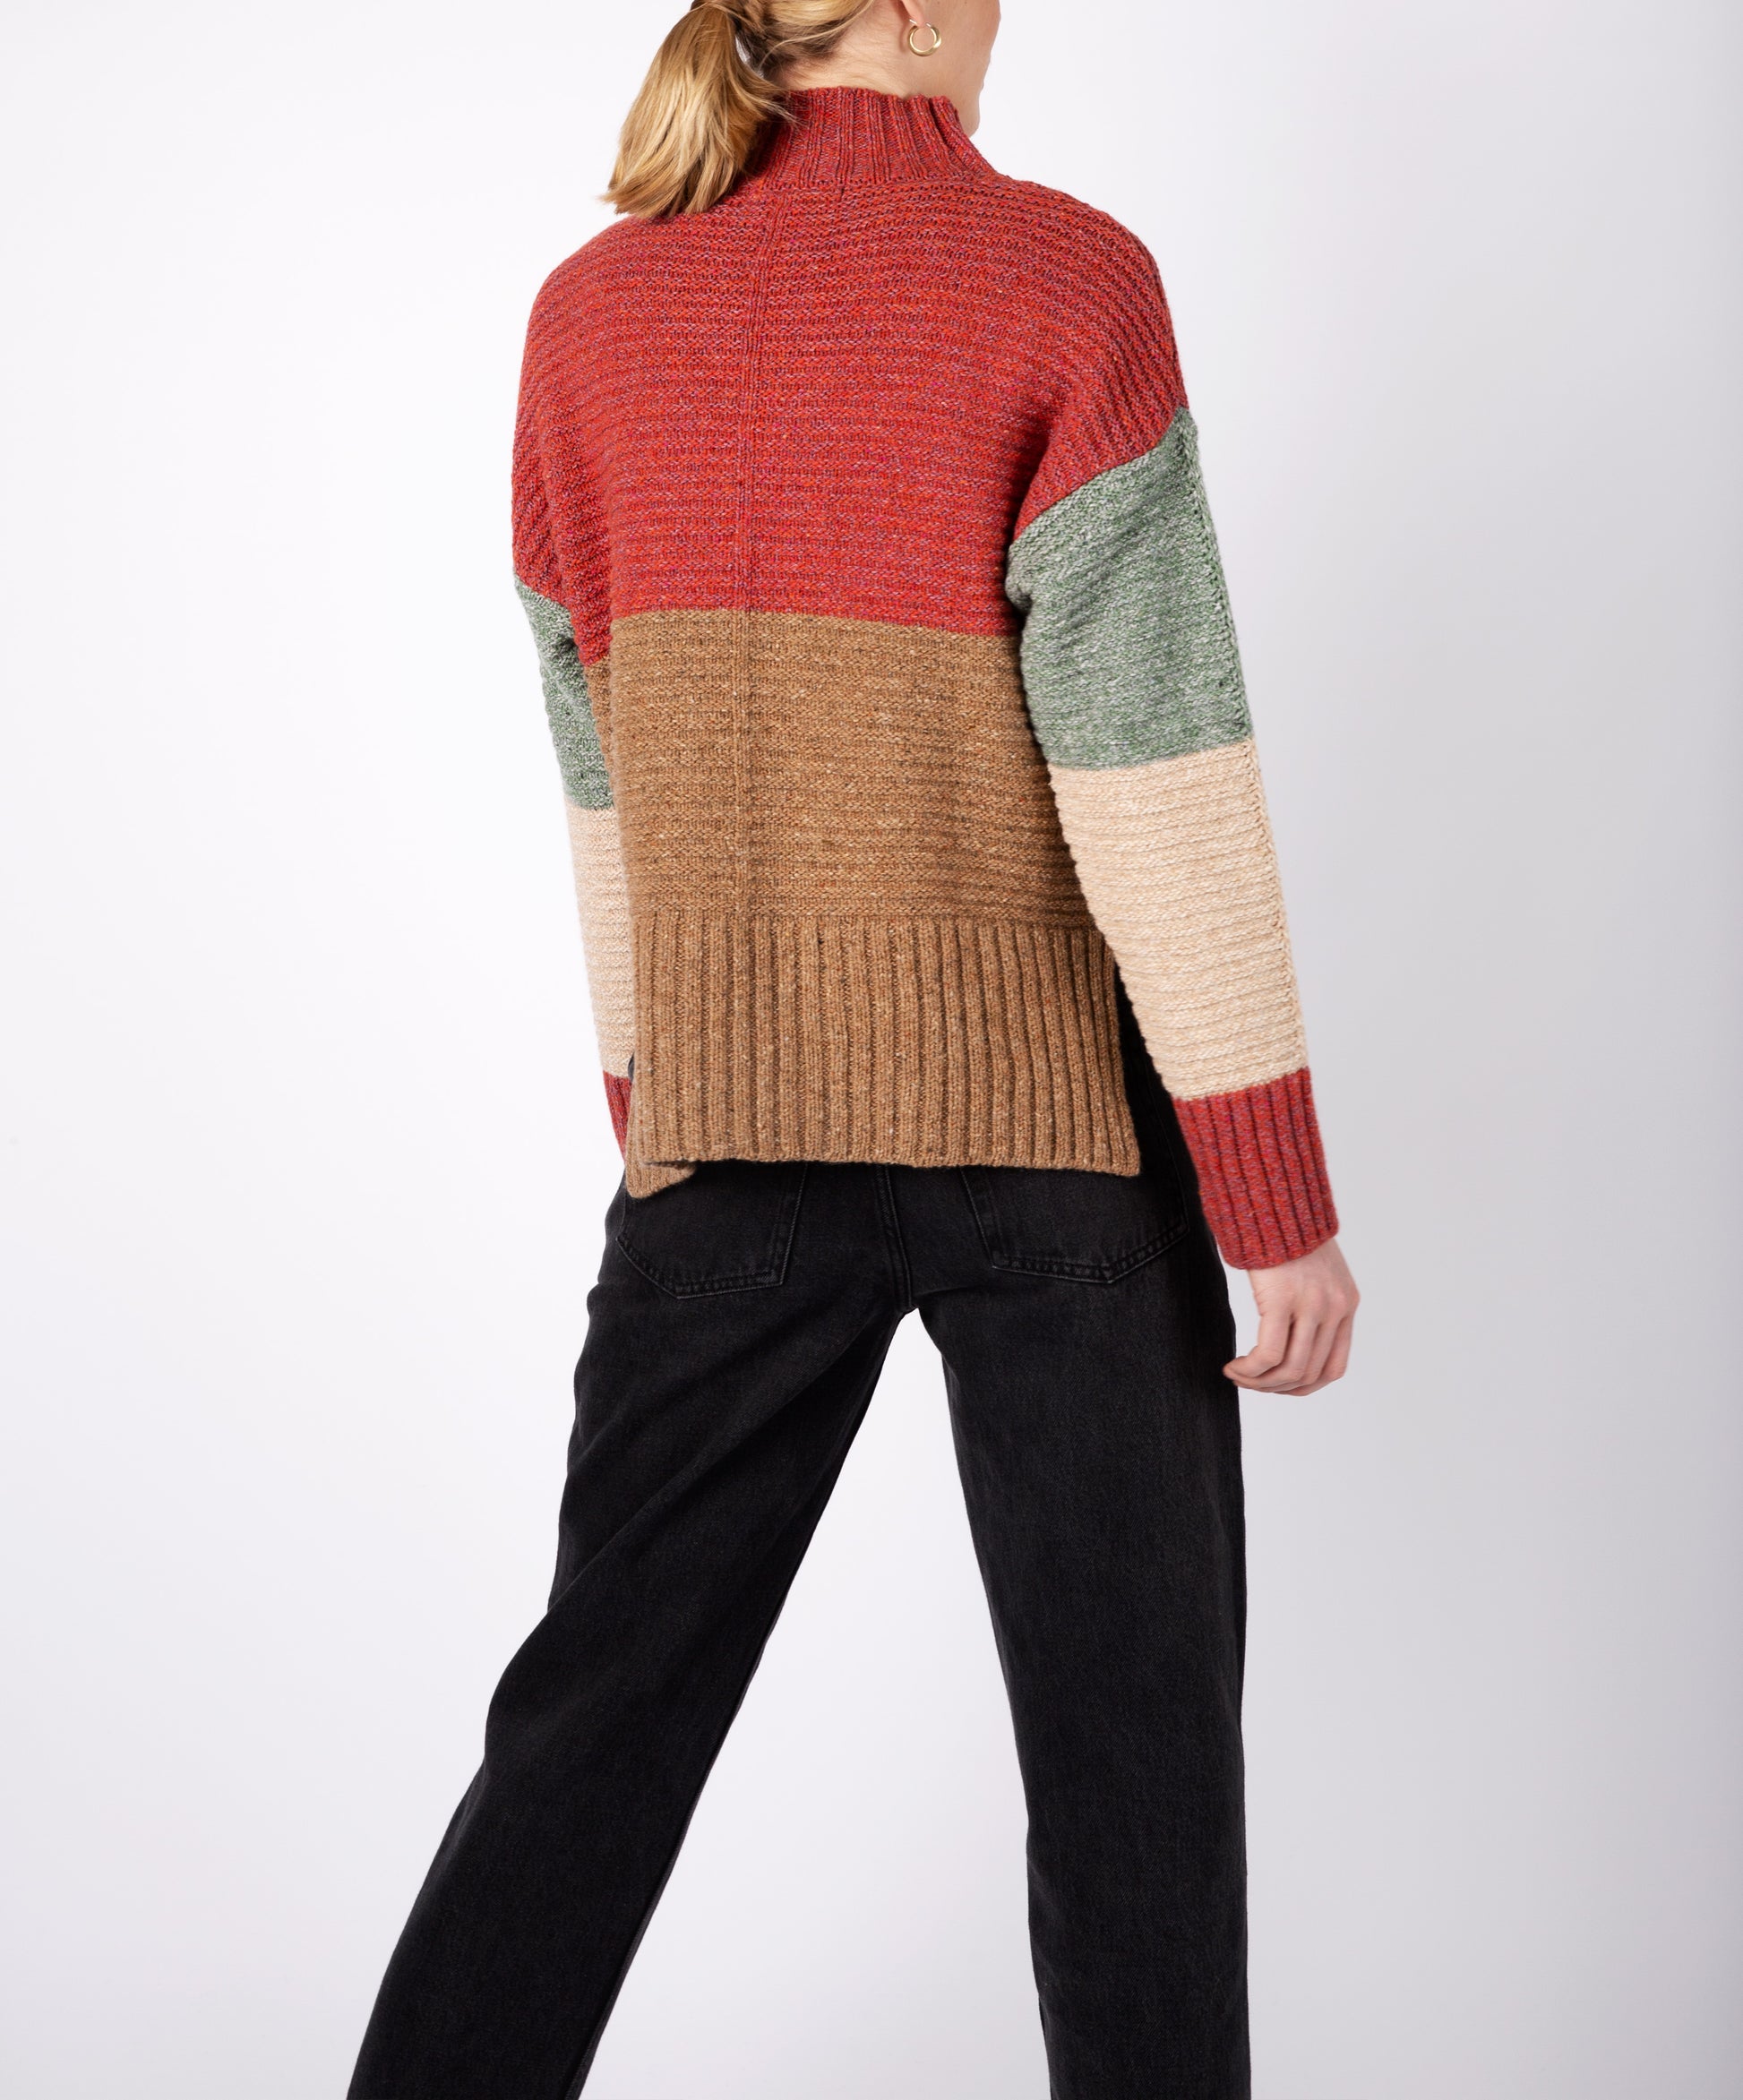 IrelandsEye Knitwear Iris Contrast Panel Funnel Neck Sweater in Sunset-Biscuit